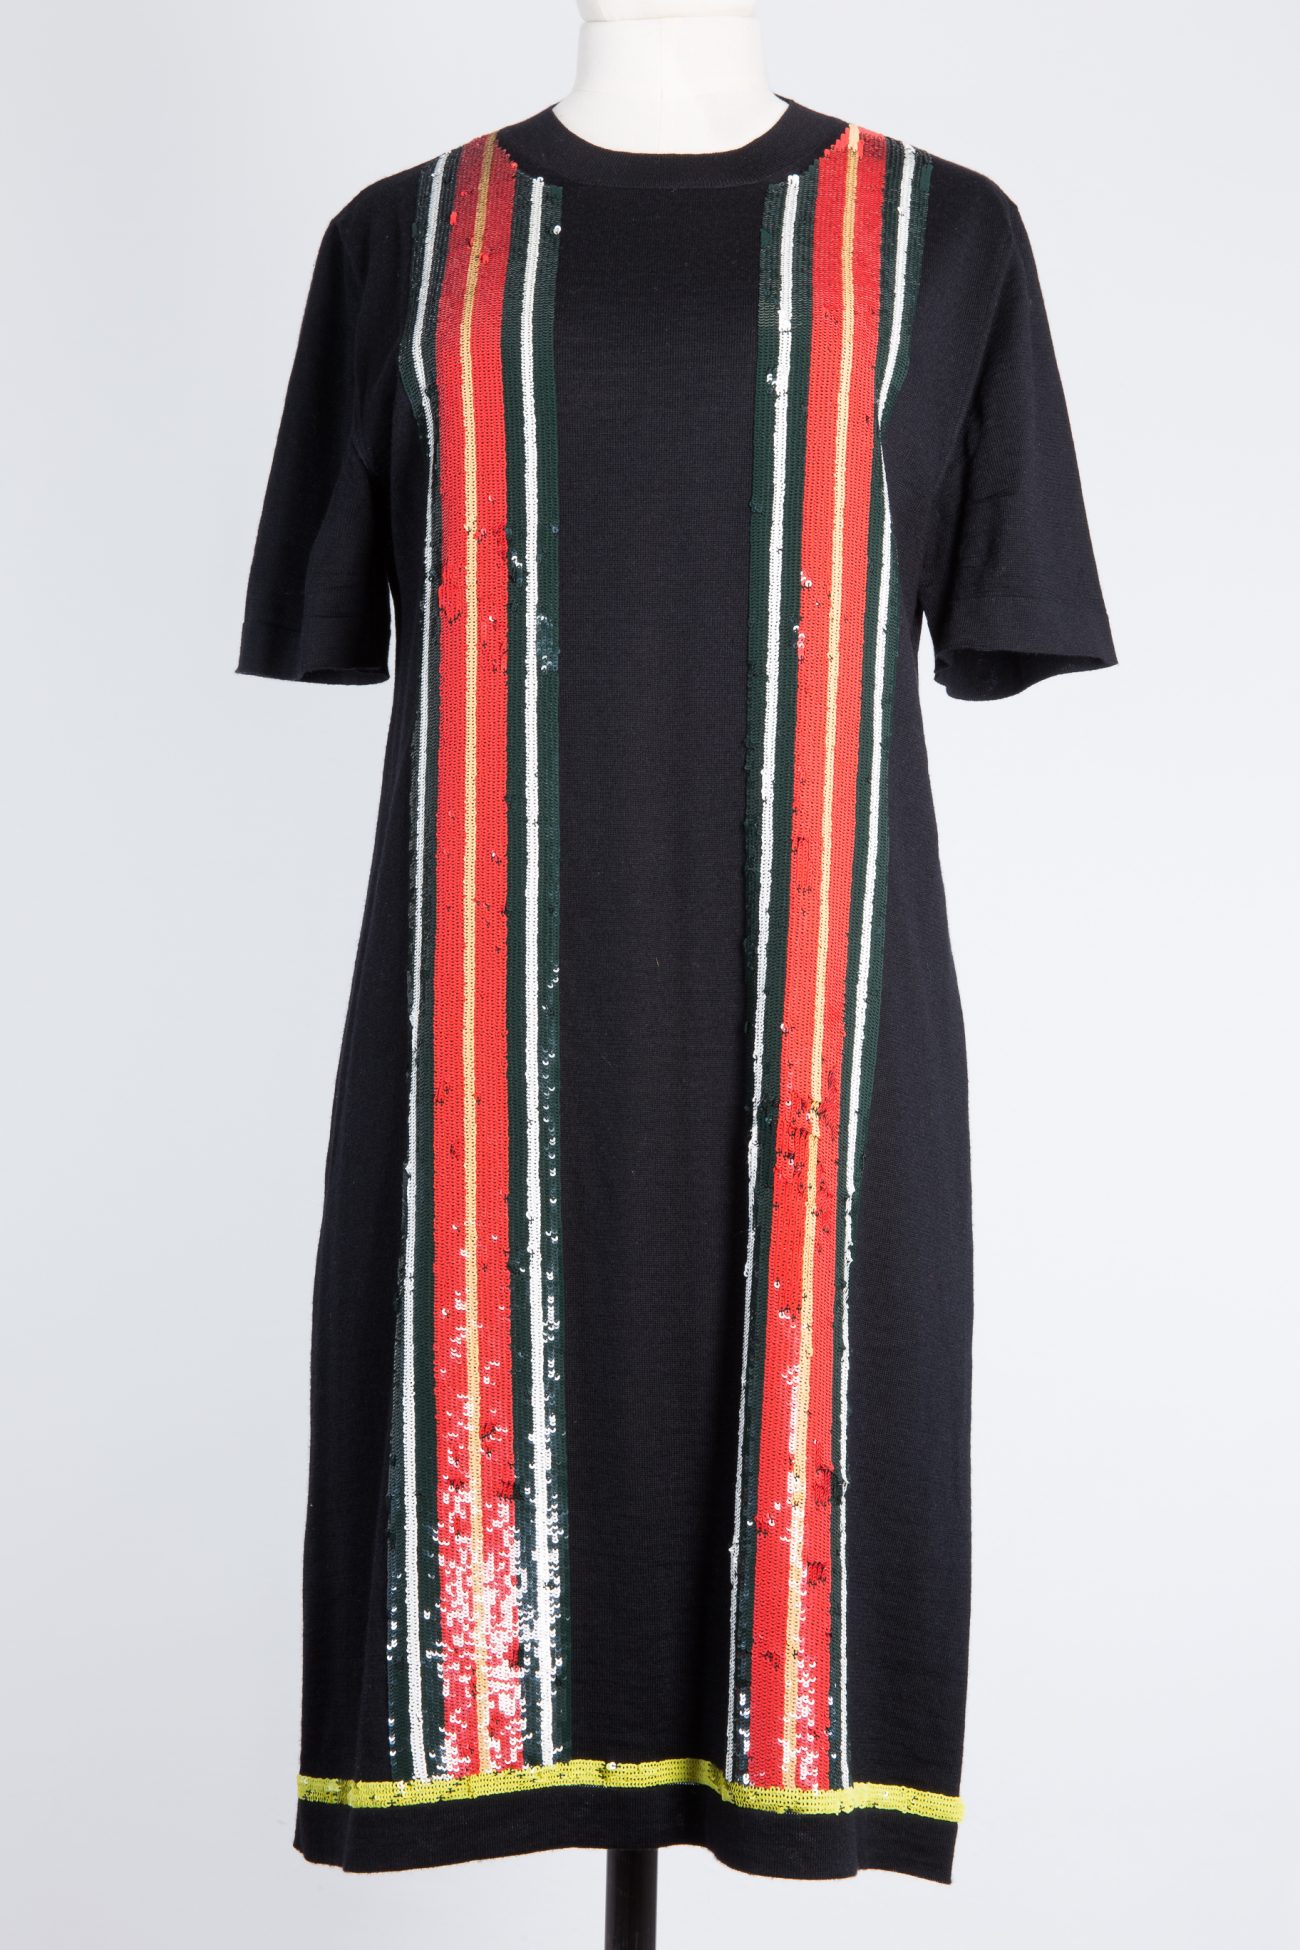 Louis Vuitton Sequin Dress